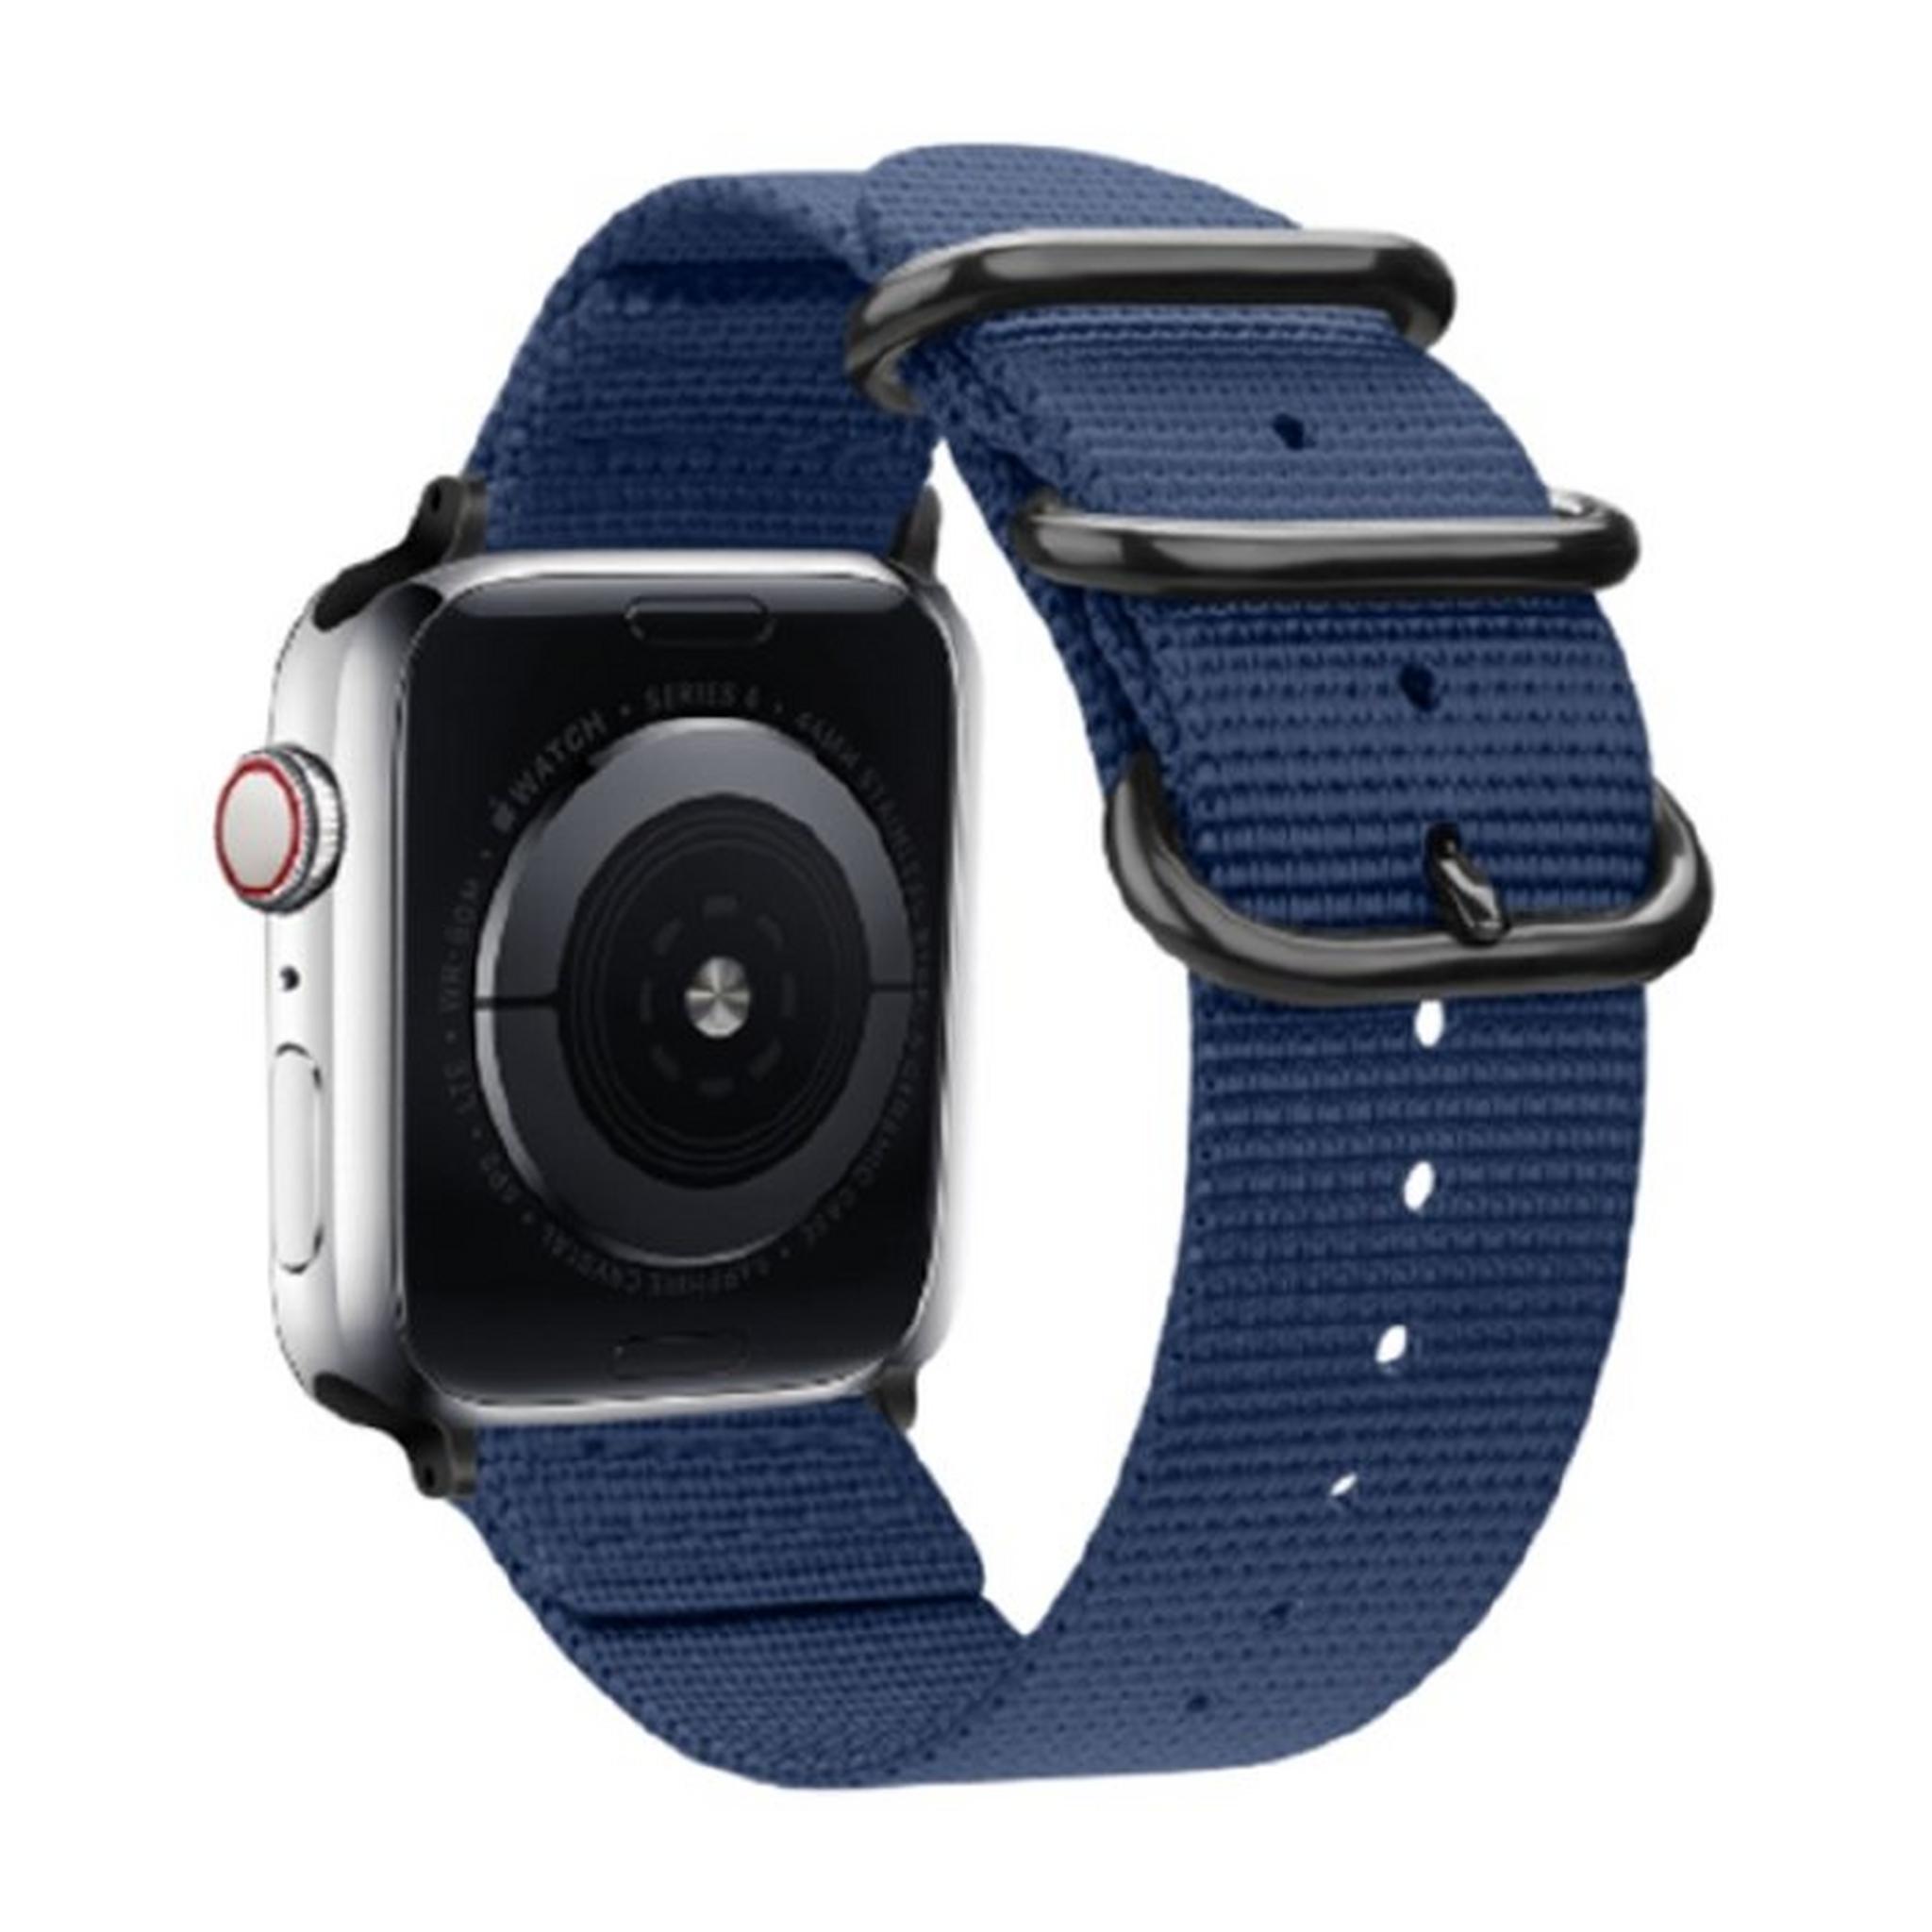 EQ Apple Watch Band Size 42/44MM (OCT1031) - Navy Blue